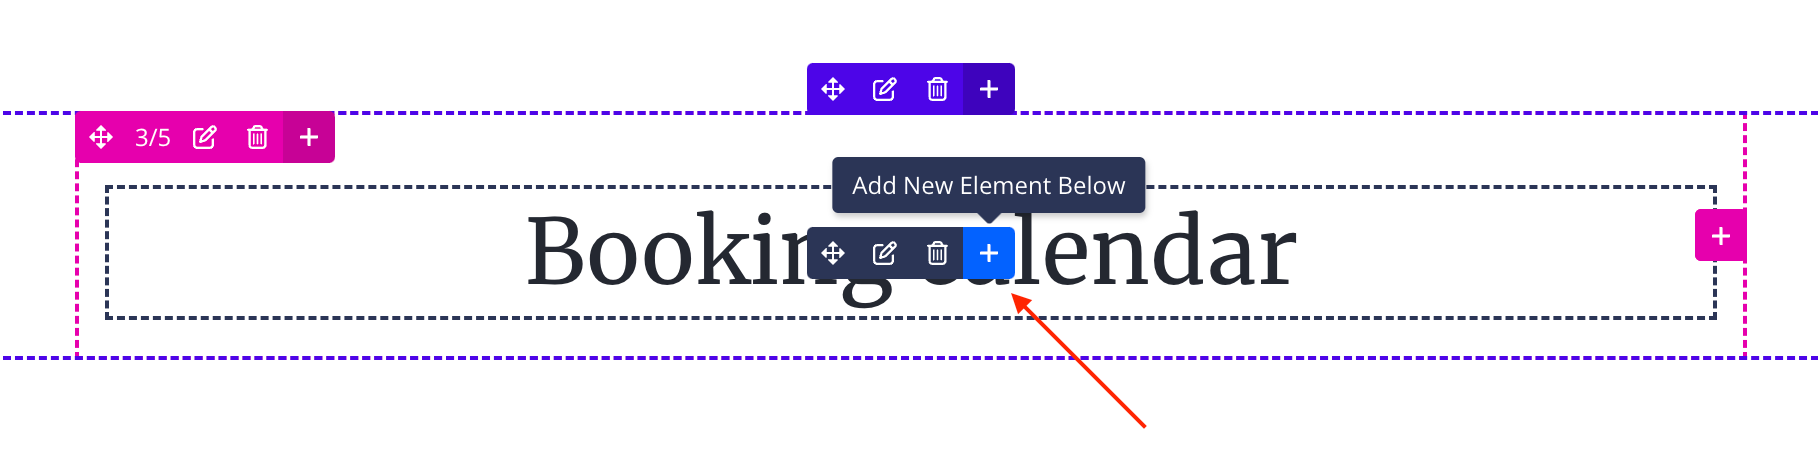 Element addition in Dorik